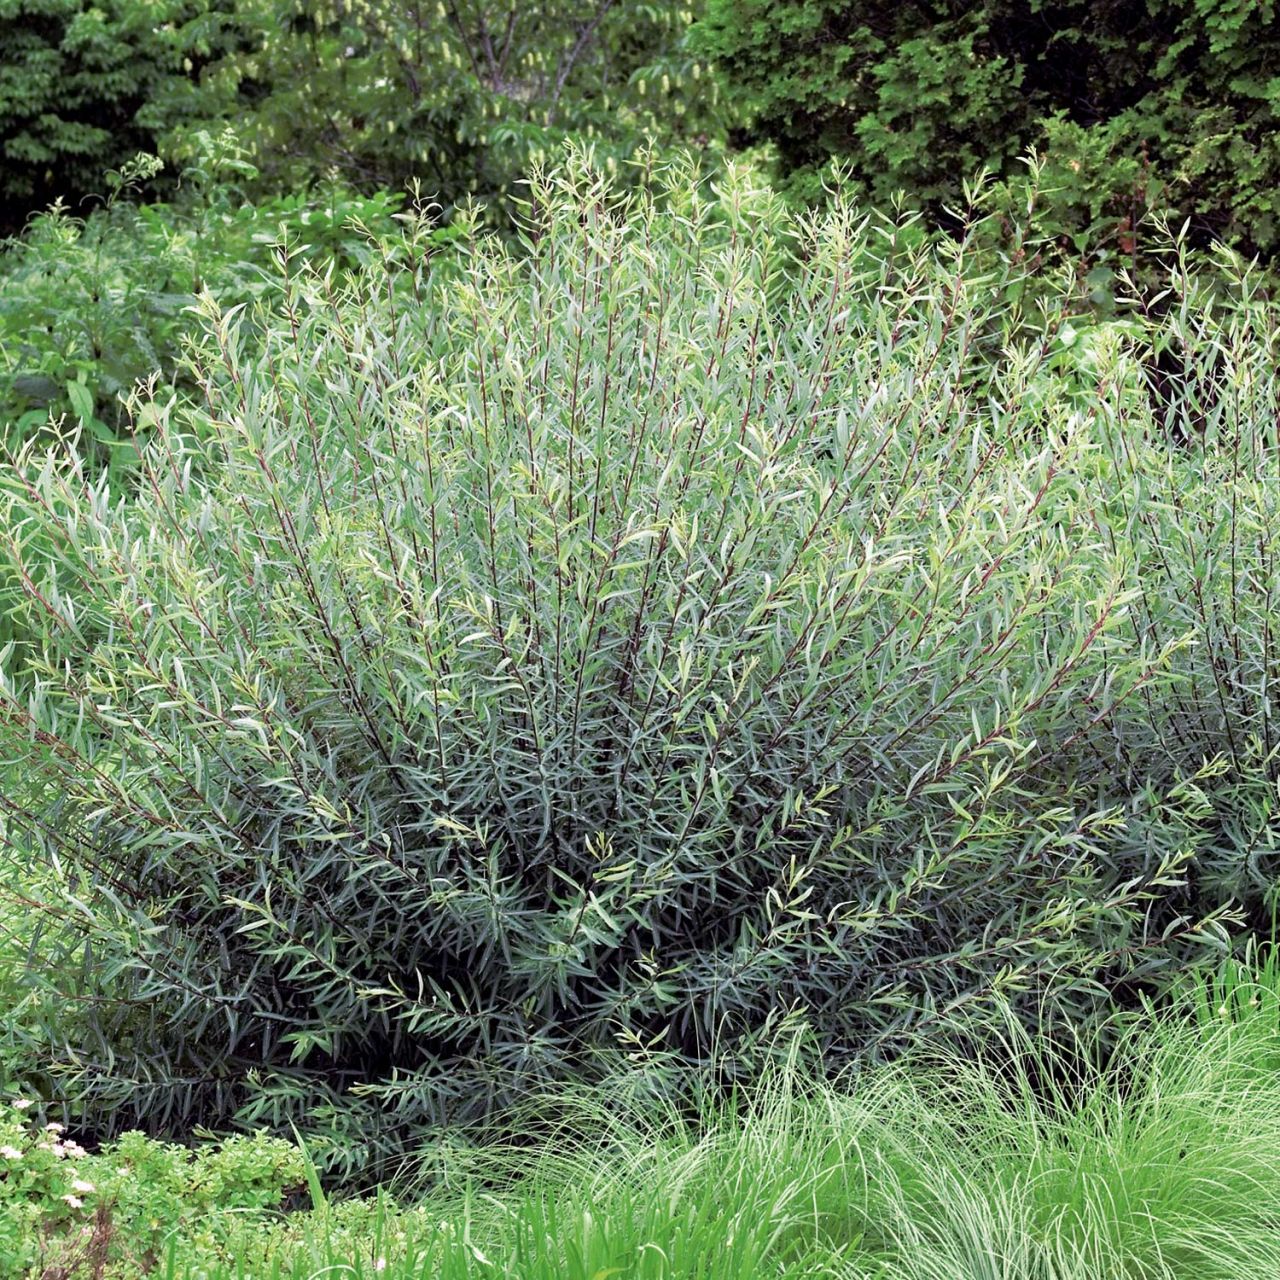  Rosmarinweide - Salix rosmarinifolia